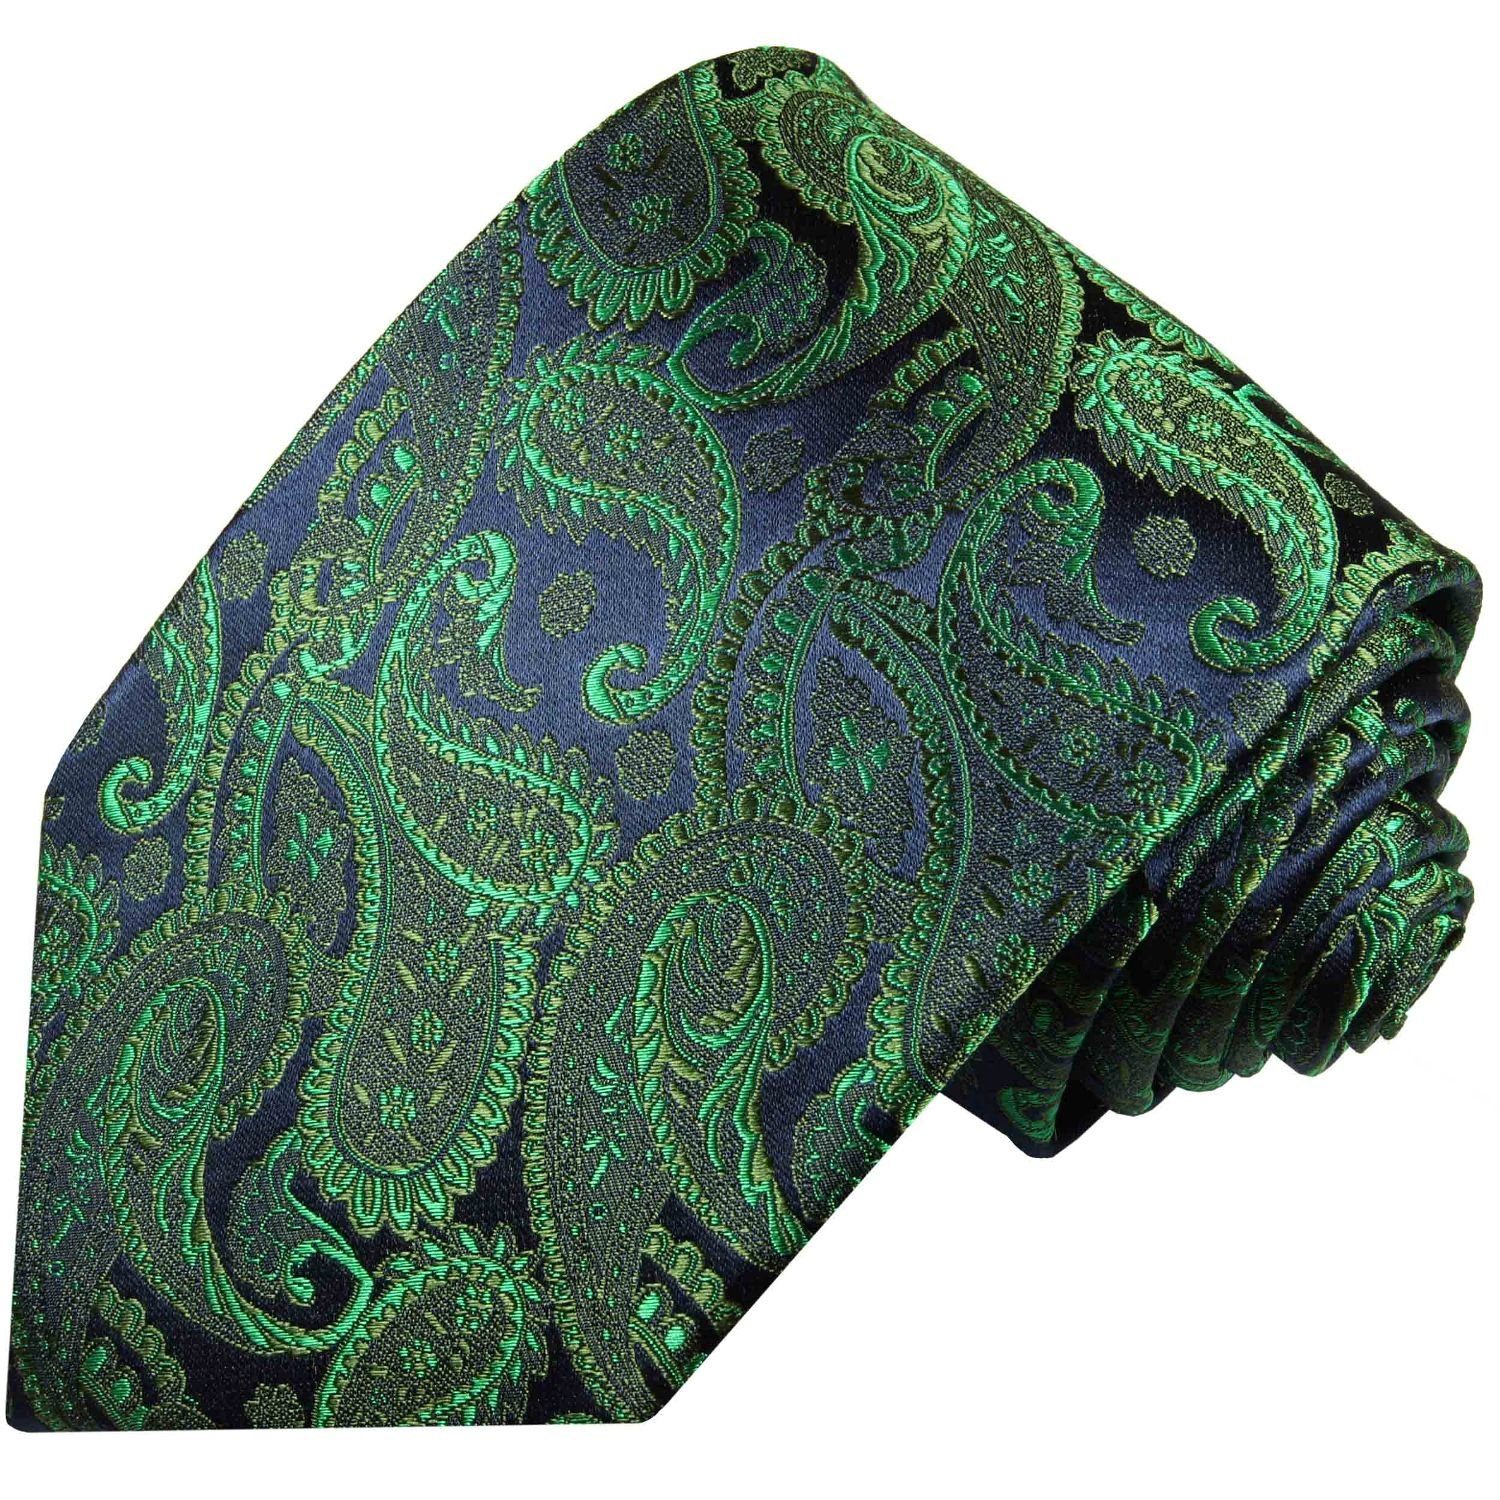 Paul Malone Krawatte Herren Seidenkrawatte Schlips modern paisley brokat 100% Seide Breit (8cm), smaragd grün 510